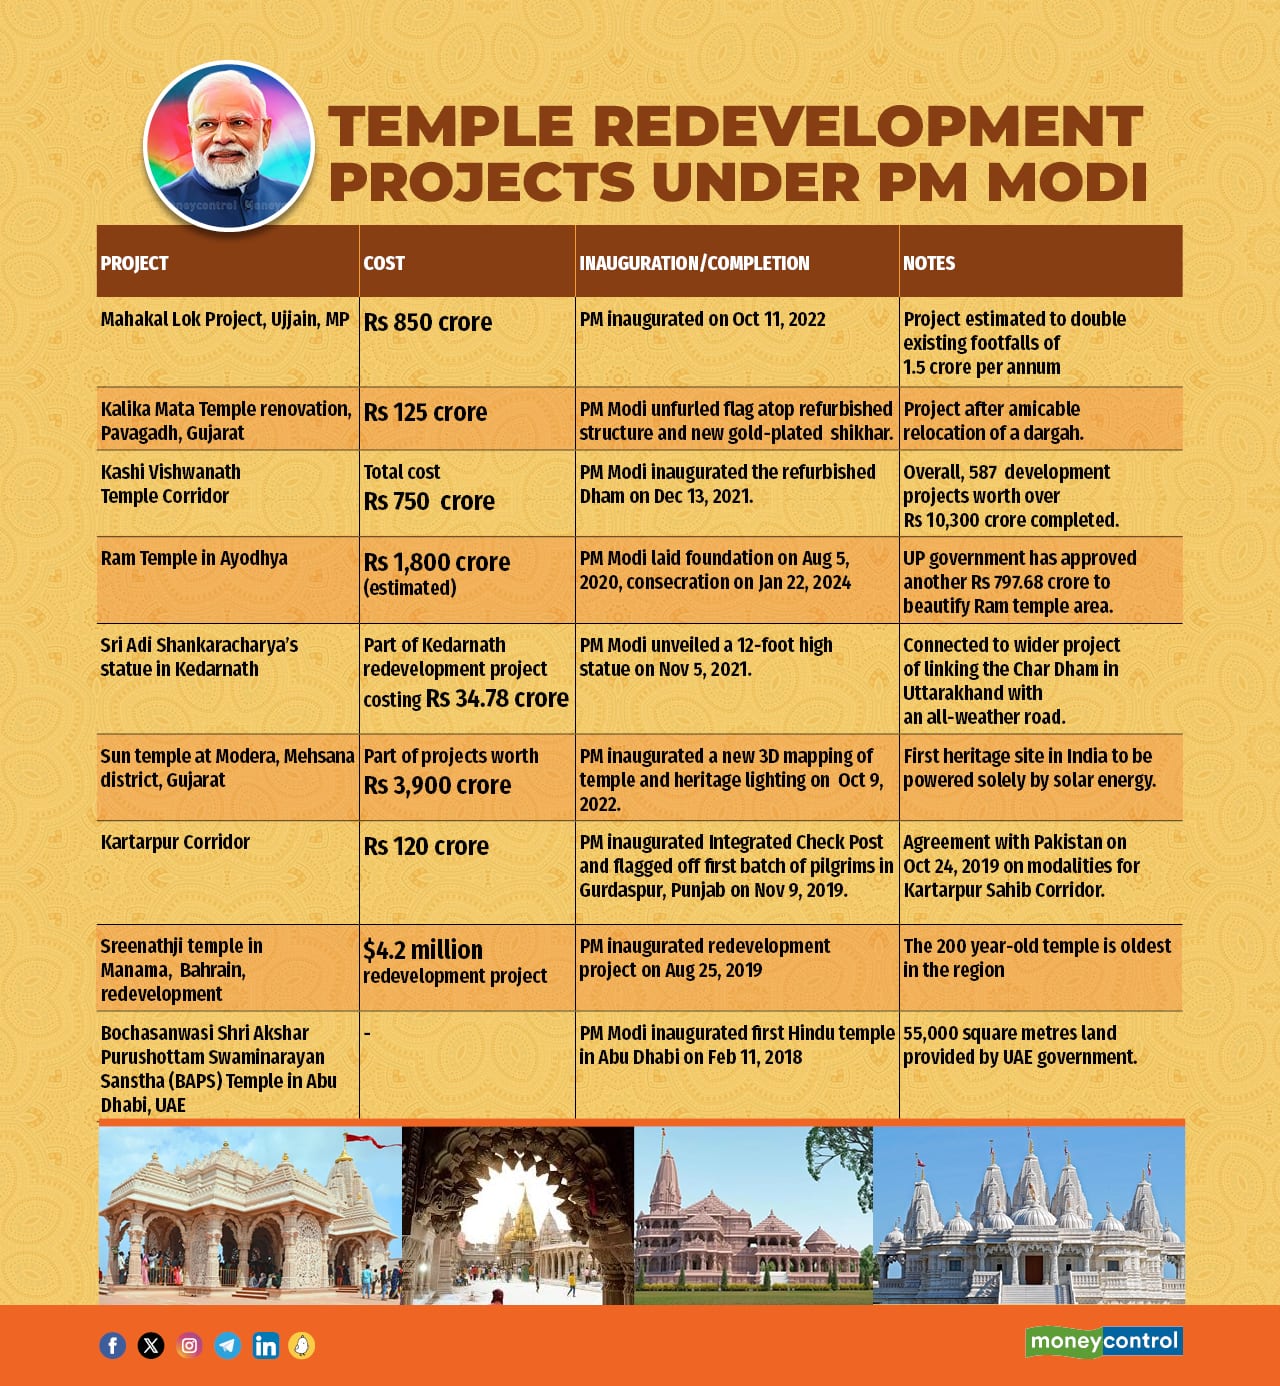 Temple Redevelopment Projects under PM Modi